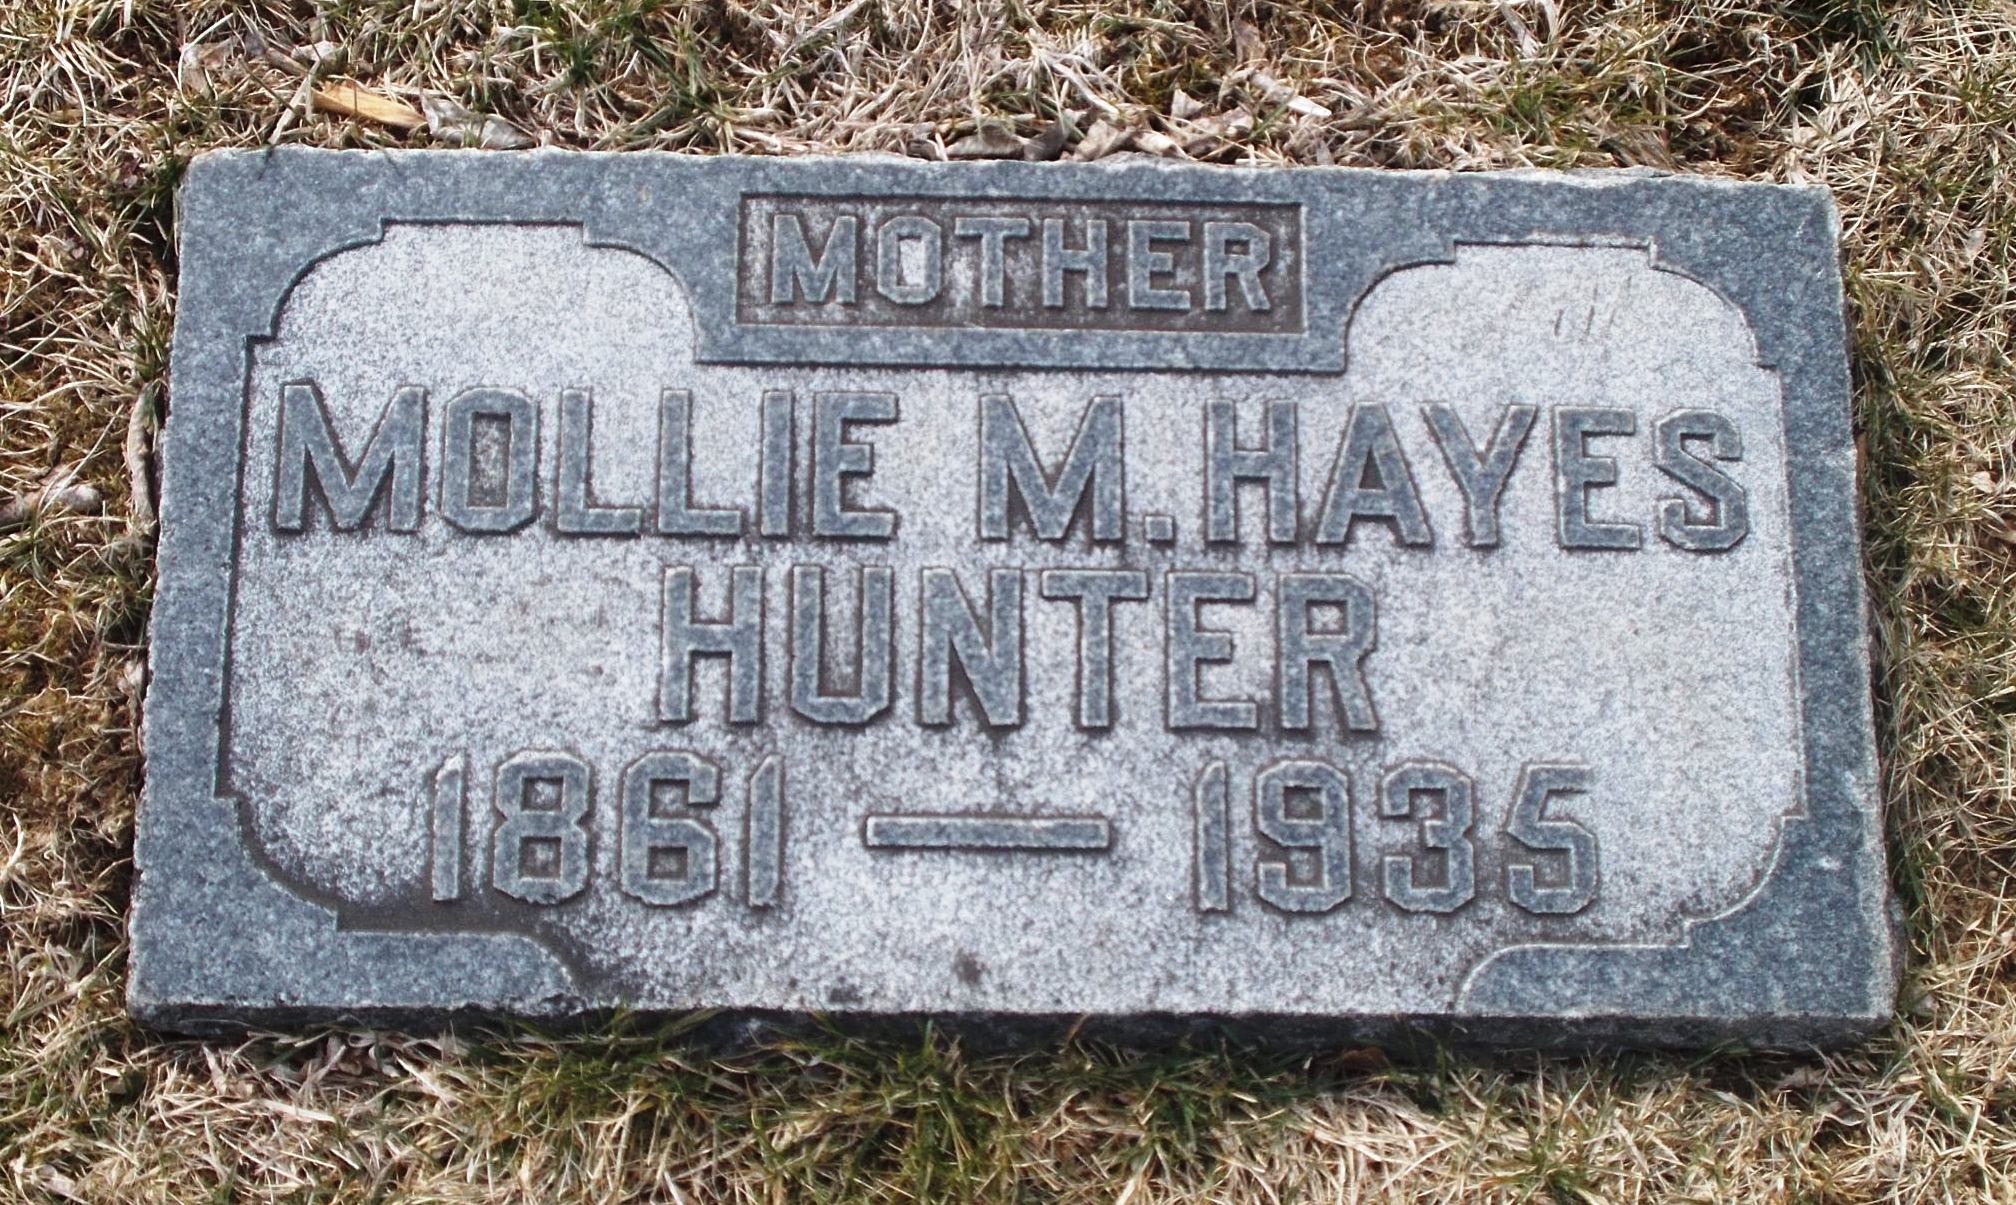 Mollie M Hayes Hunter